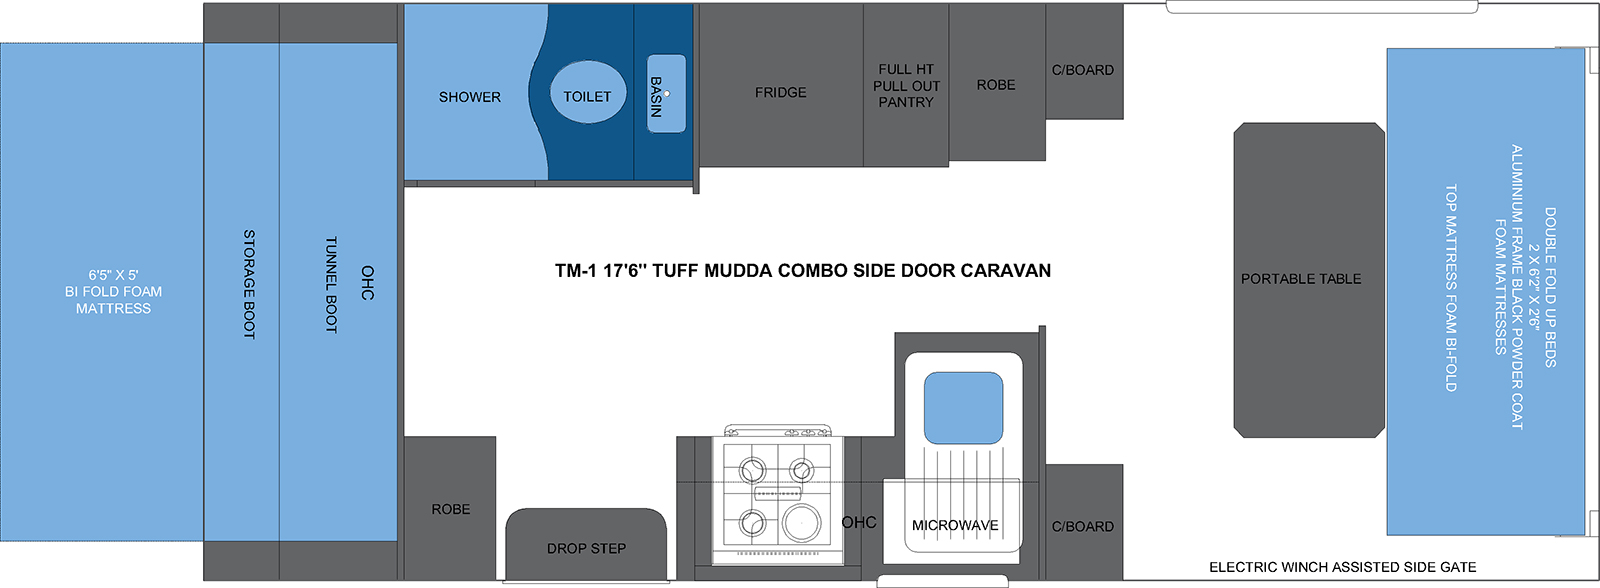 TM-1 17'6 TUFF MUDDA COMBO SIDE DOOR CARAVAN